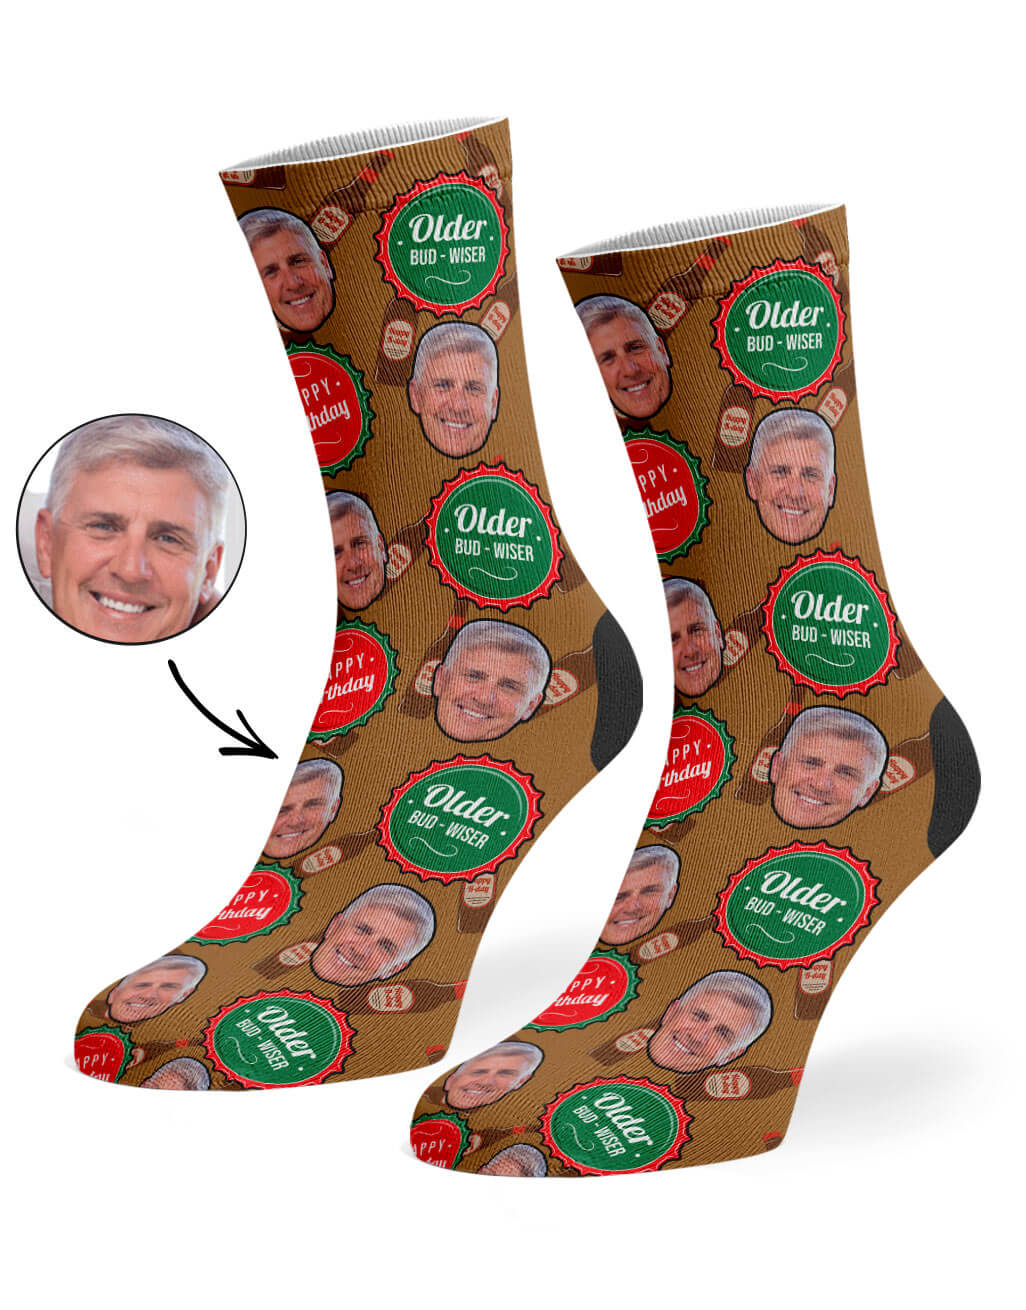 Older Bud-Wiser Birthday Custom Socks